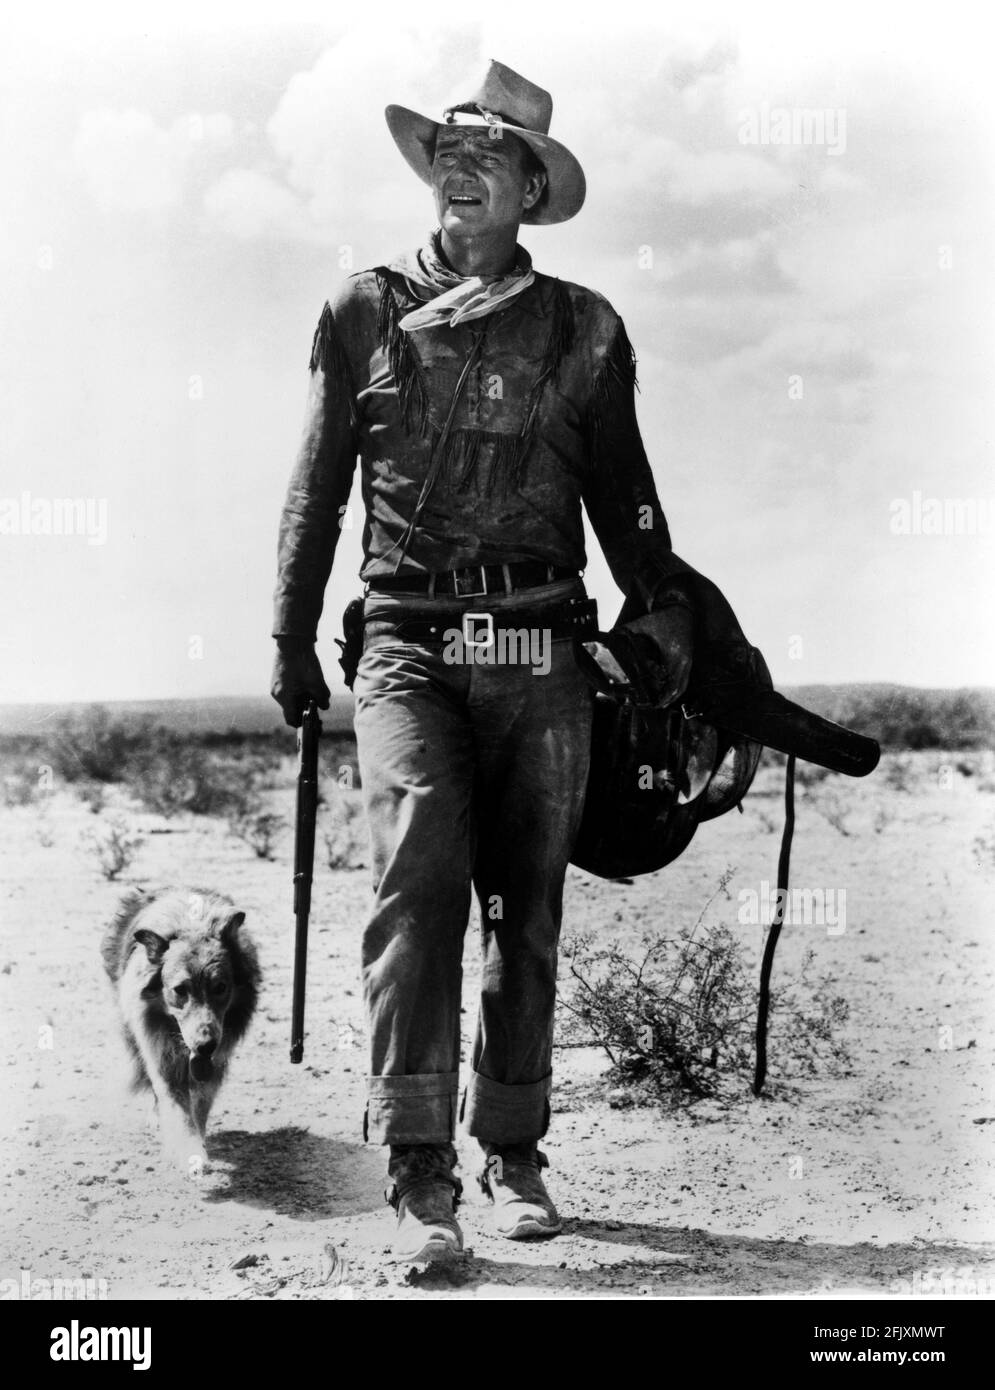 1960 , USA : The movie actor JOHN  WAYNE  ( 1907 - 1979 ) as DAVID CROCKETT  in THE ALAMO ( La battaglia di Alamo ) , directed by JOHN WAYNE himself  -  FILM - CINEMA - attore cinematografico -  cappello - hat - portrait - ritratto - WESTERN - WILDE WEST - dog - cane - fucile - rifle - gun - belt - cintura - sella - JEANS - desert - deserto - stivali - boots  -  foulard - bandanna  ----   Archivio GBB Stock Photo